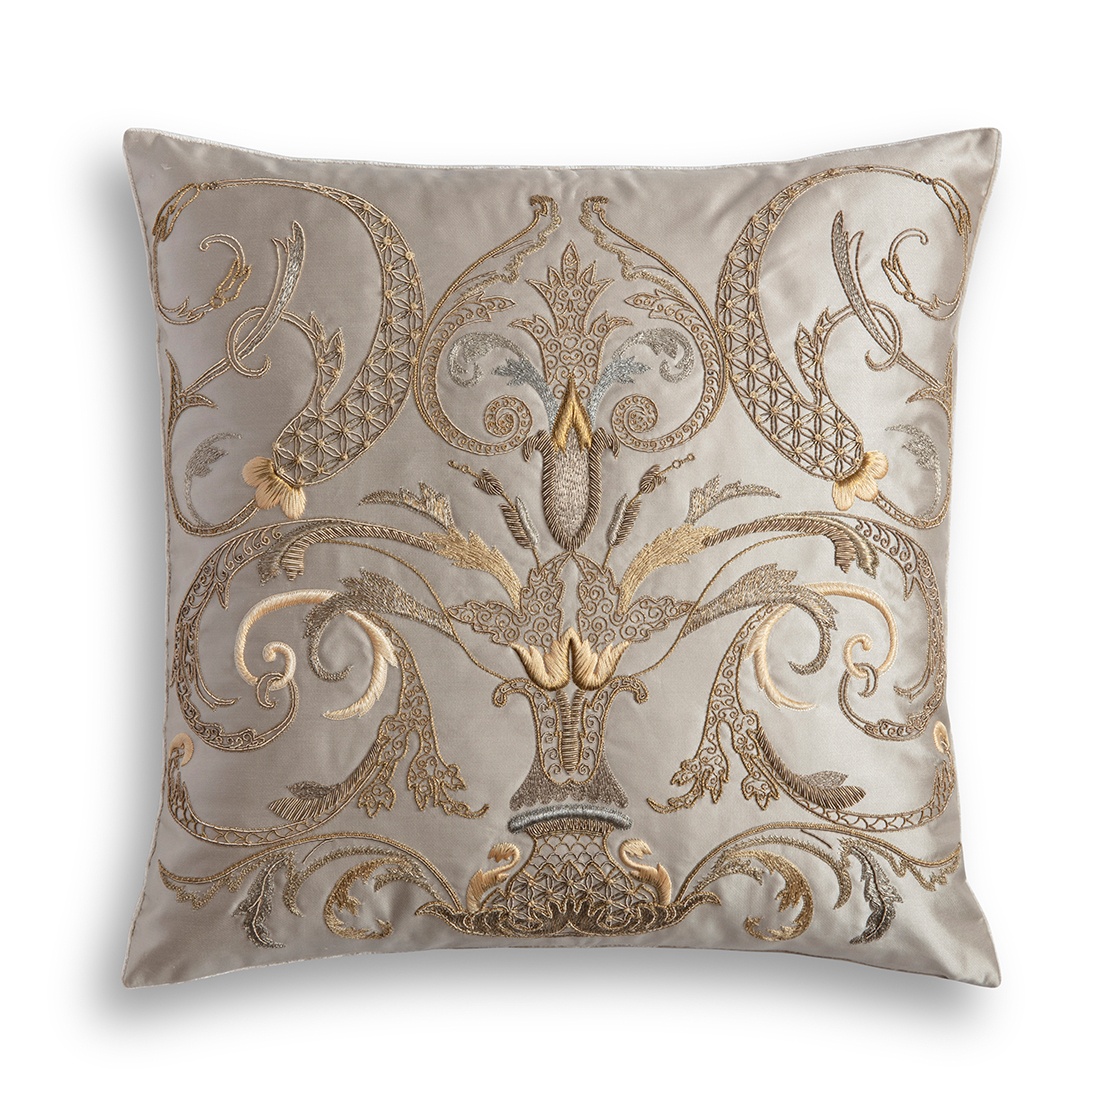 Puccini cushion on Silk satin - Beaumont & Fletcher